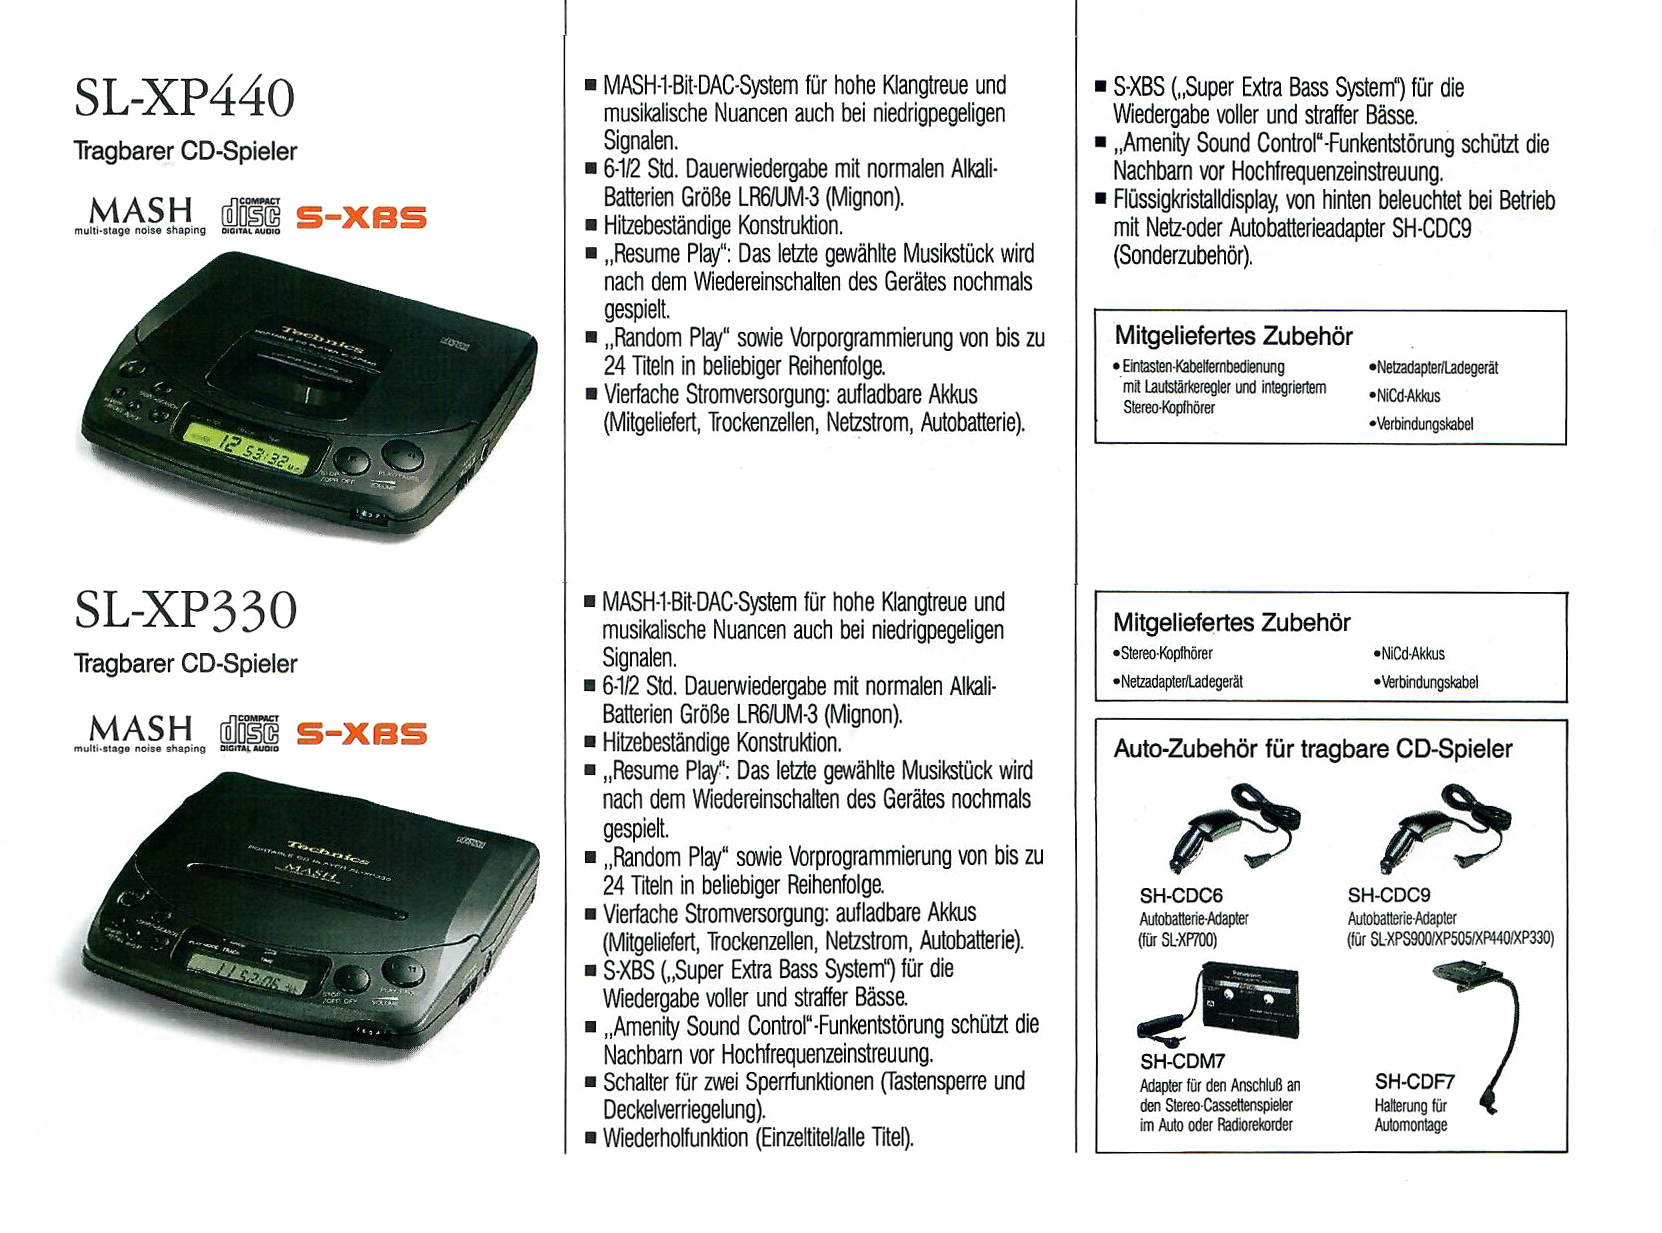 Technics SL-XP 330-440-Prospekt-1992.jpg